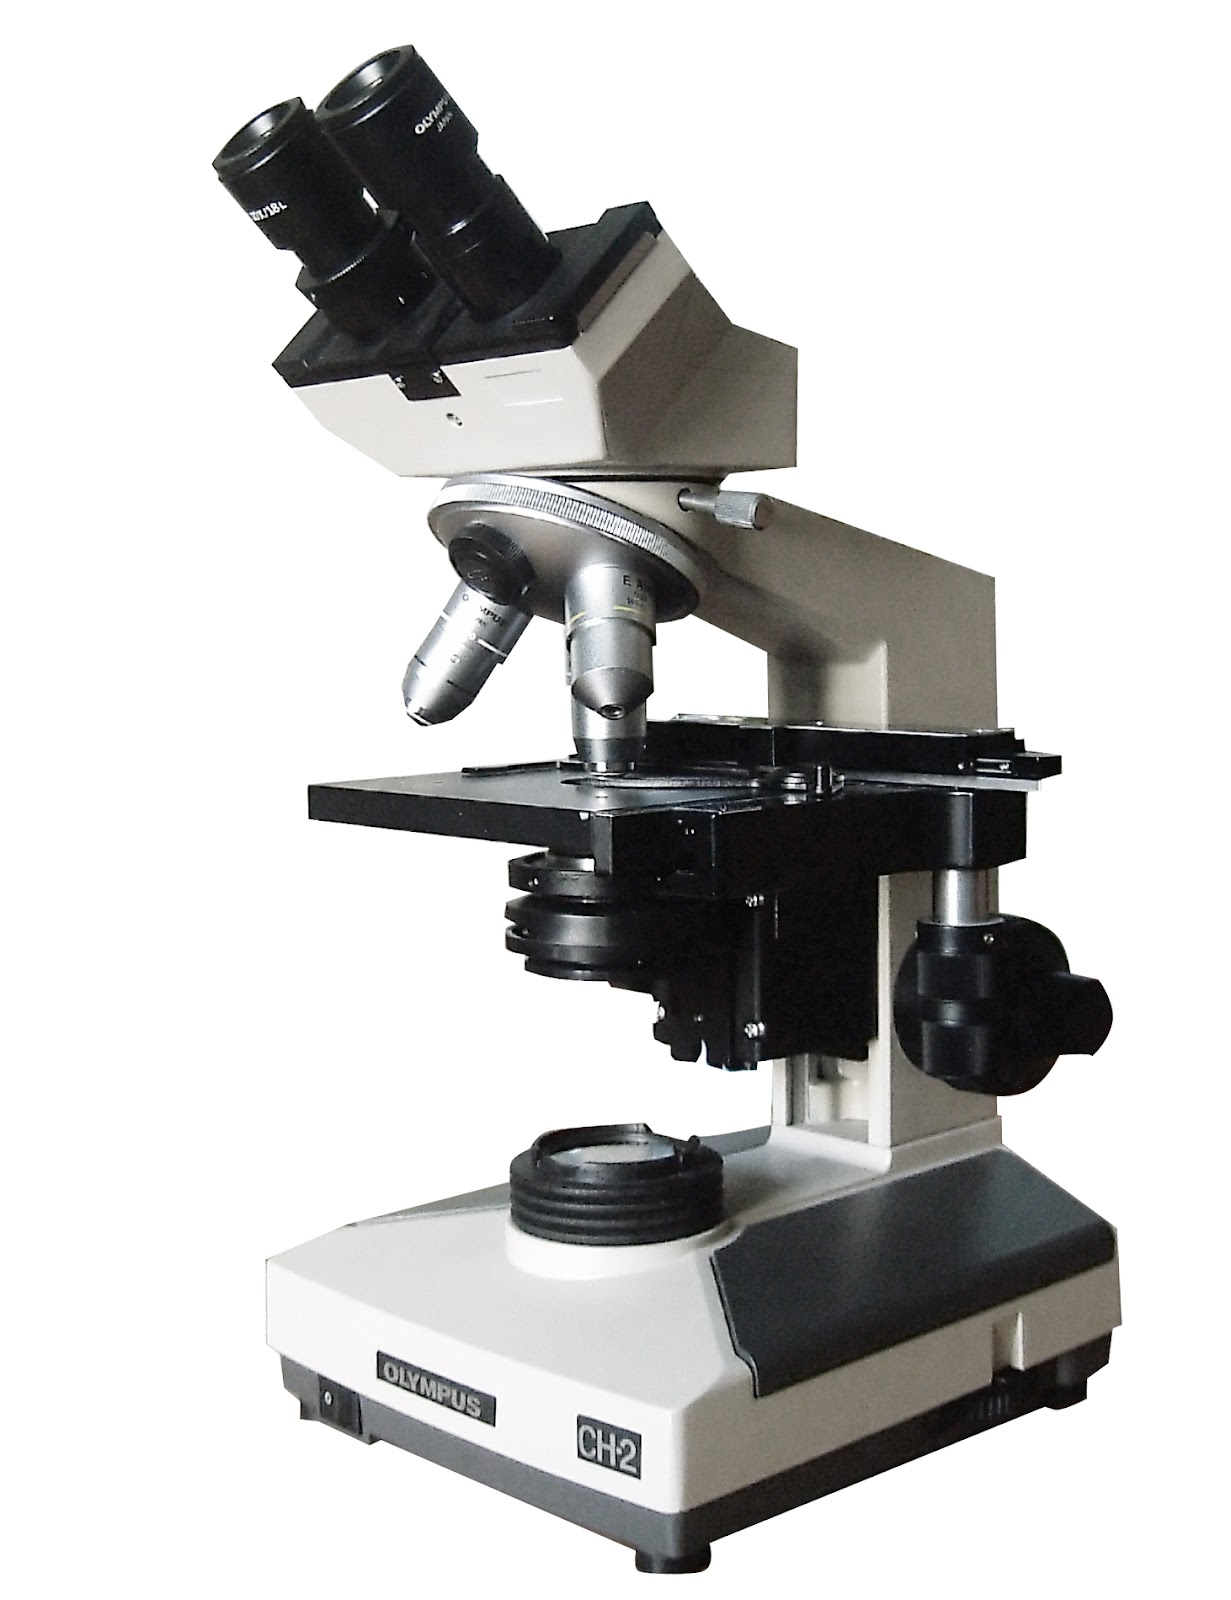 File:Olympus CH2 microscope 1.jpg - Wikimedia Commons